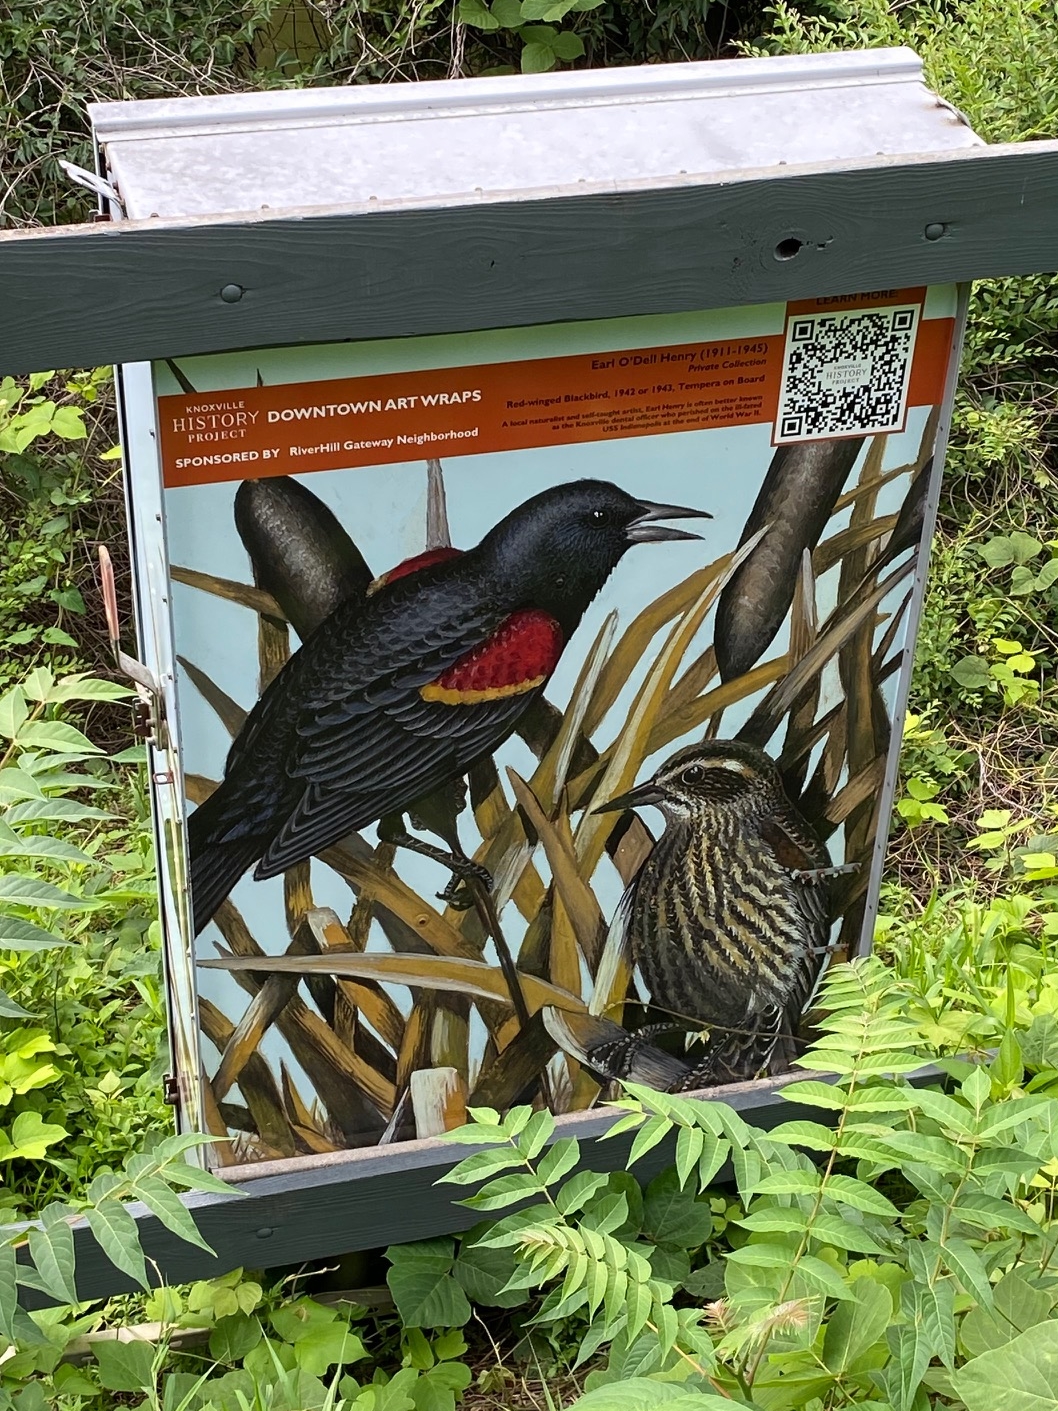 Red-Winged Blackbird by Earl O. Henry on James White Parkway by Volunteer Marina. Sponsored by RiverHill Gateway Neighborhood.